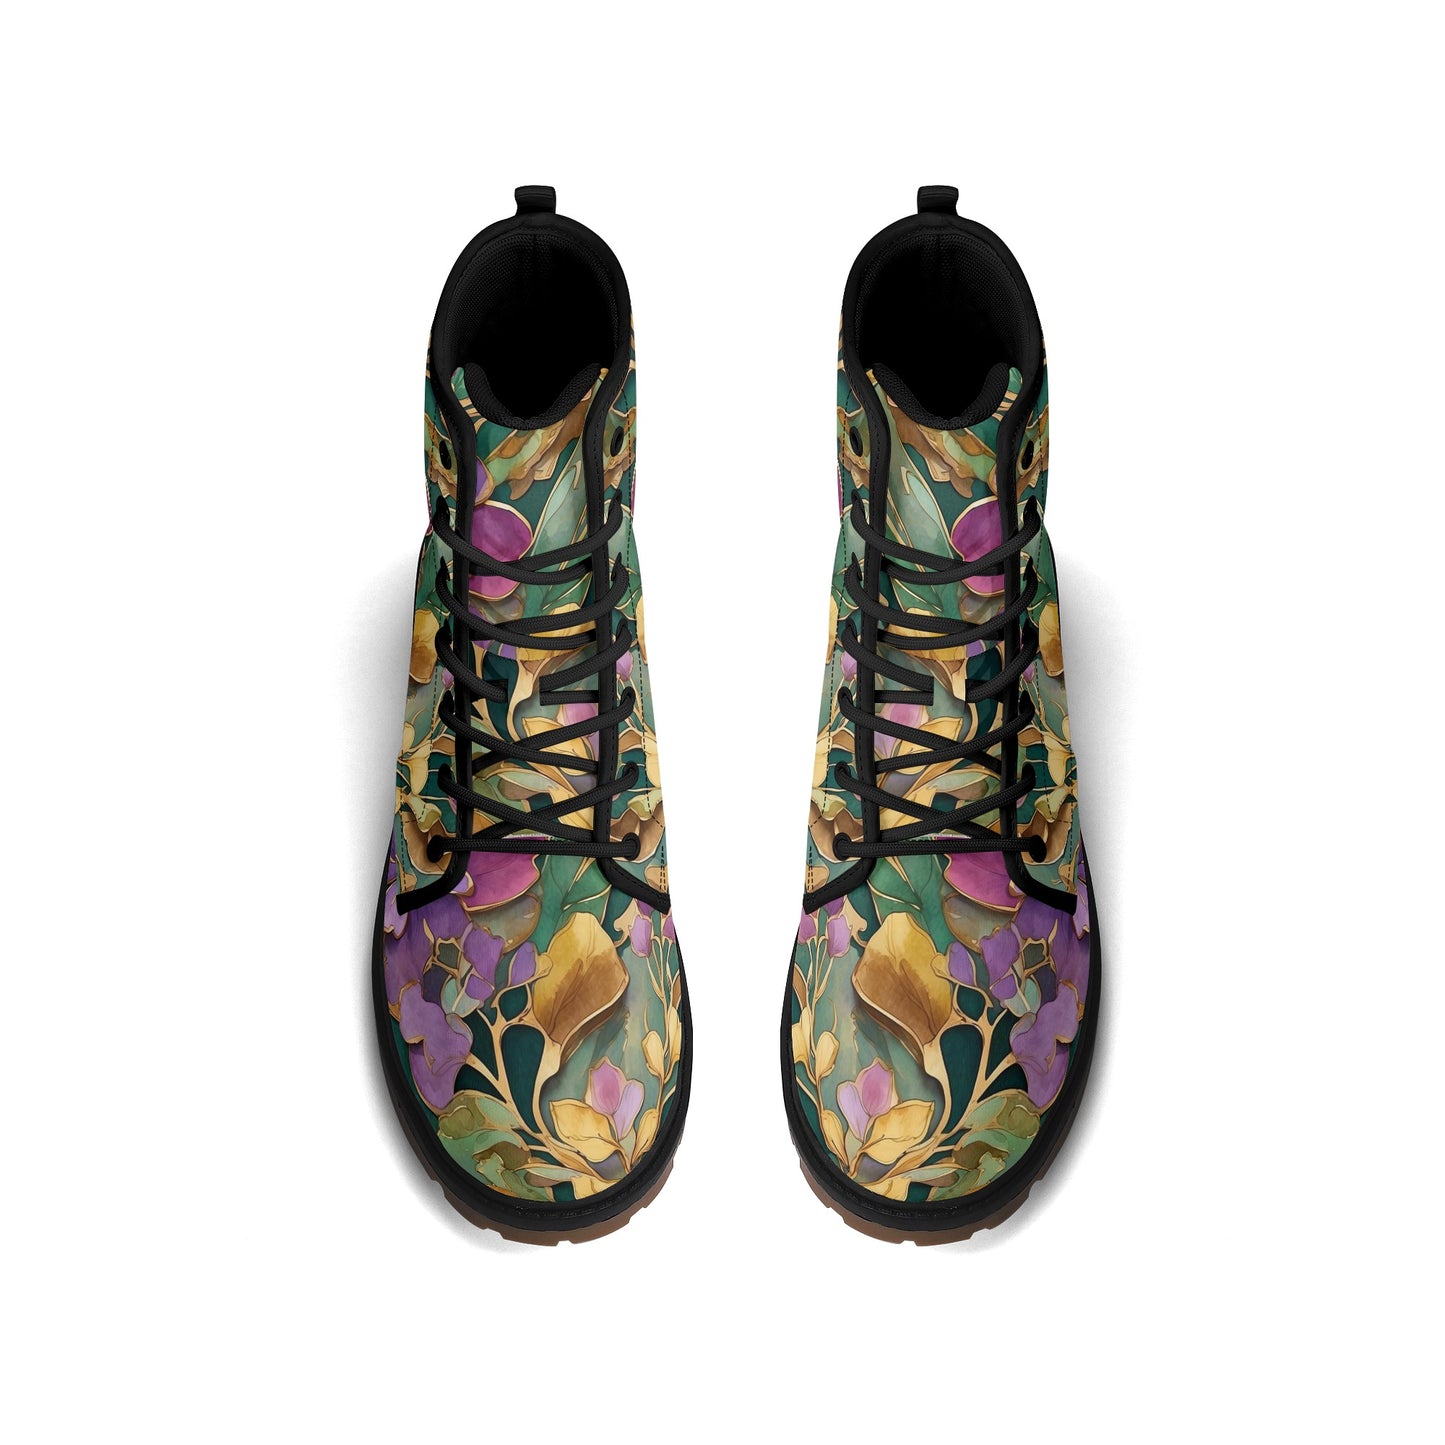 Mardi Gras Flowers Womens Combat Boots